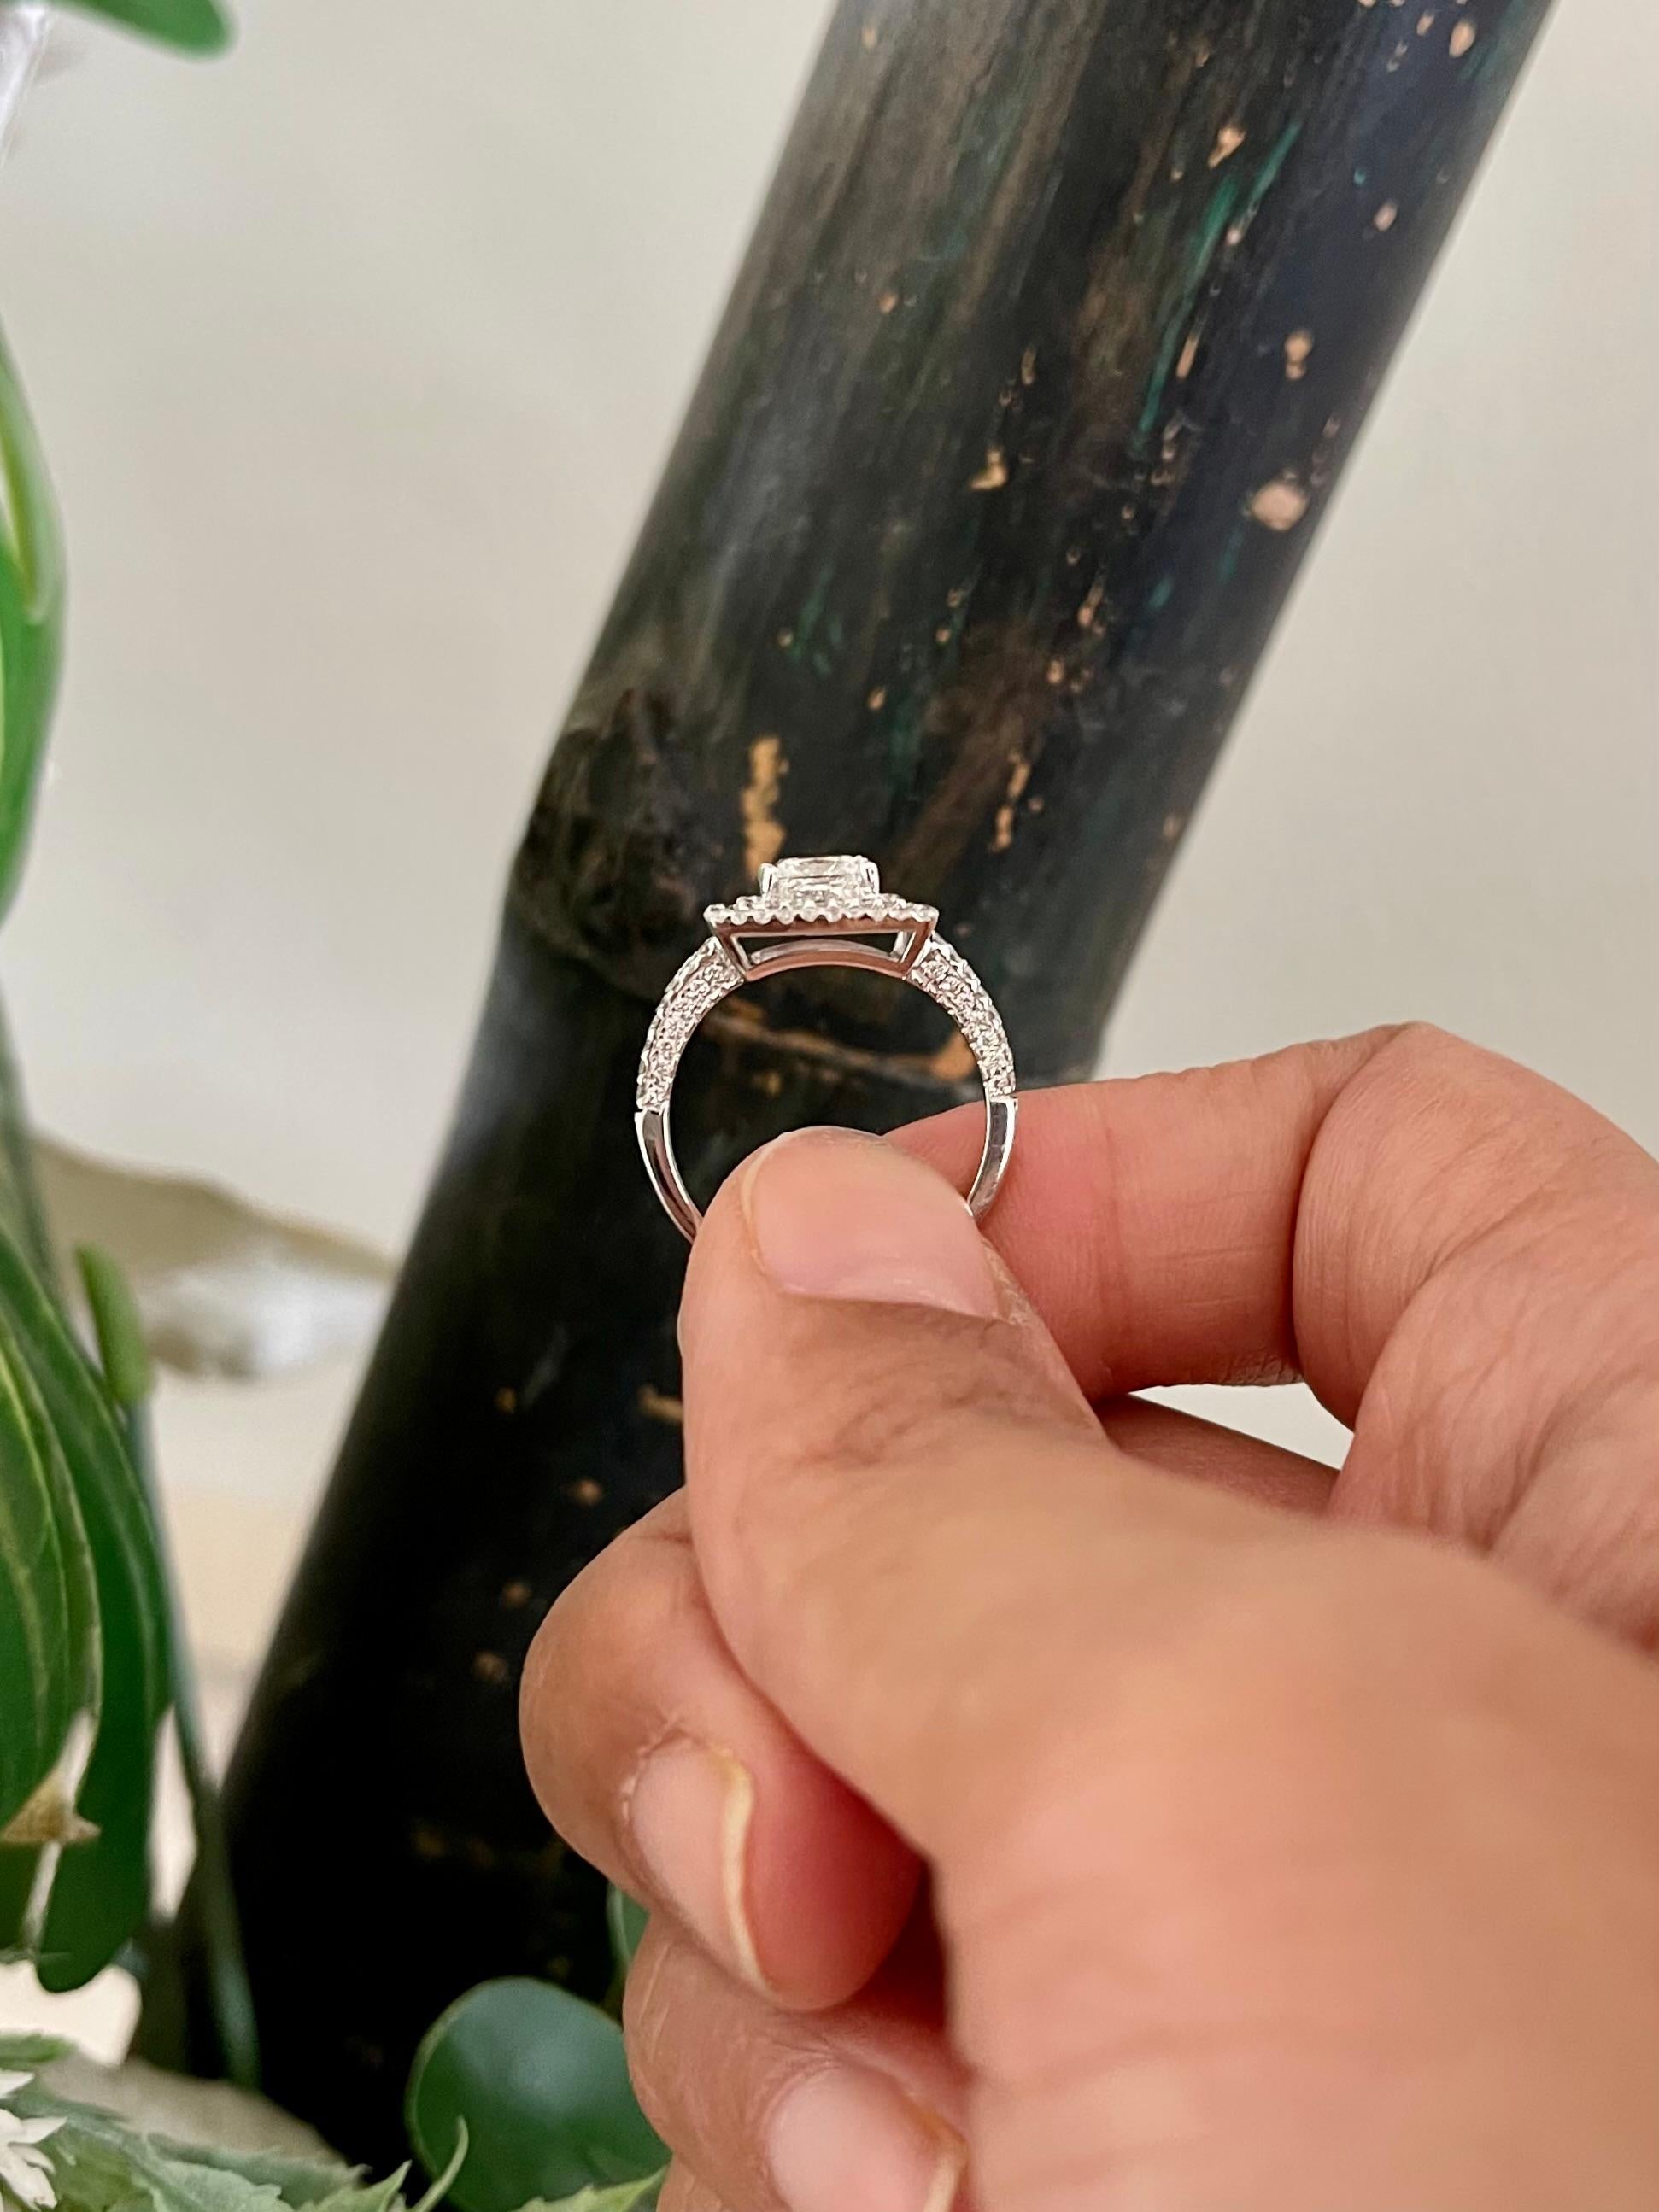 GIA Certified Princess Cut 1.01 Carat F VVS2 Diamond Ring in 18K White Gold For Sale 2